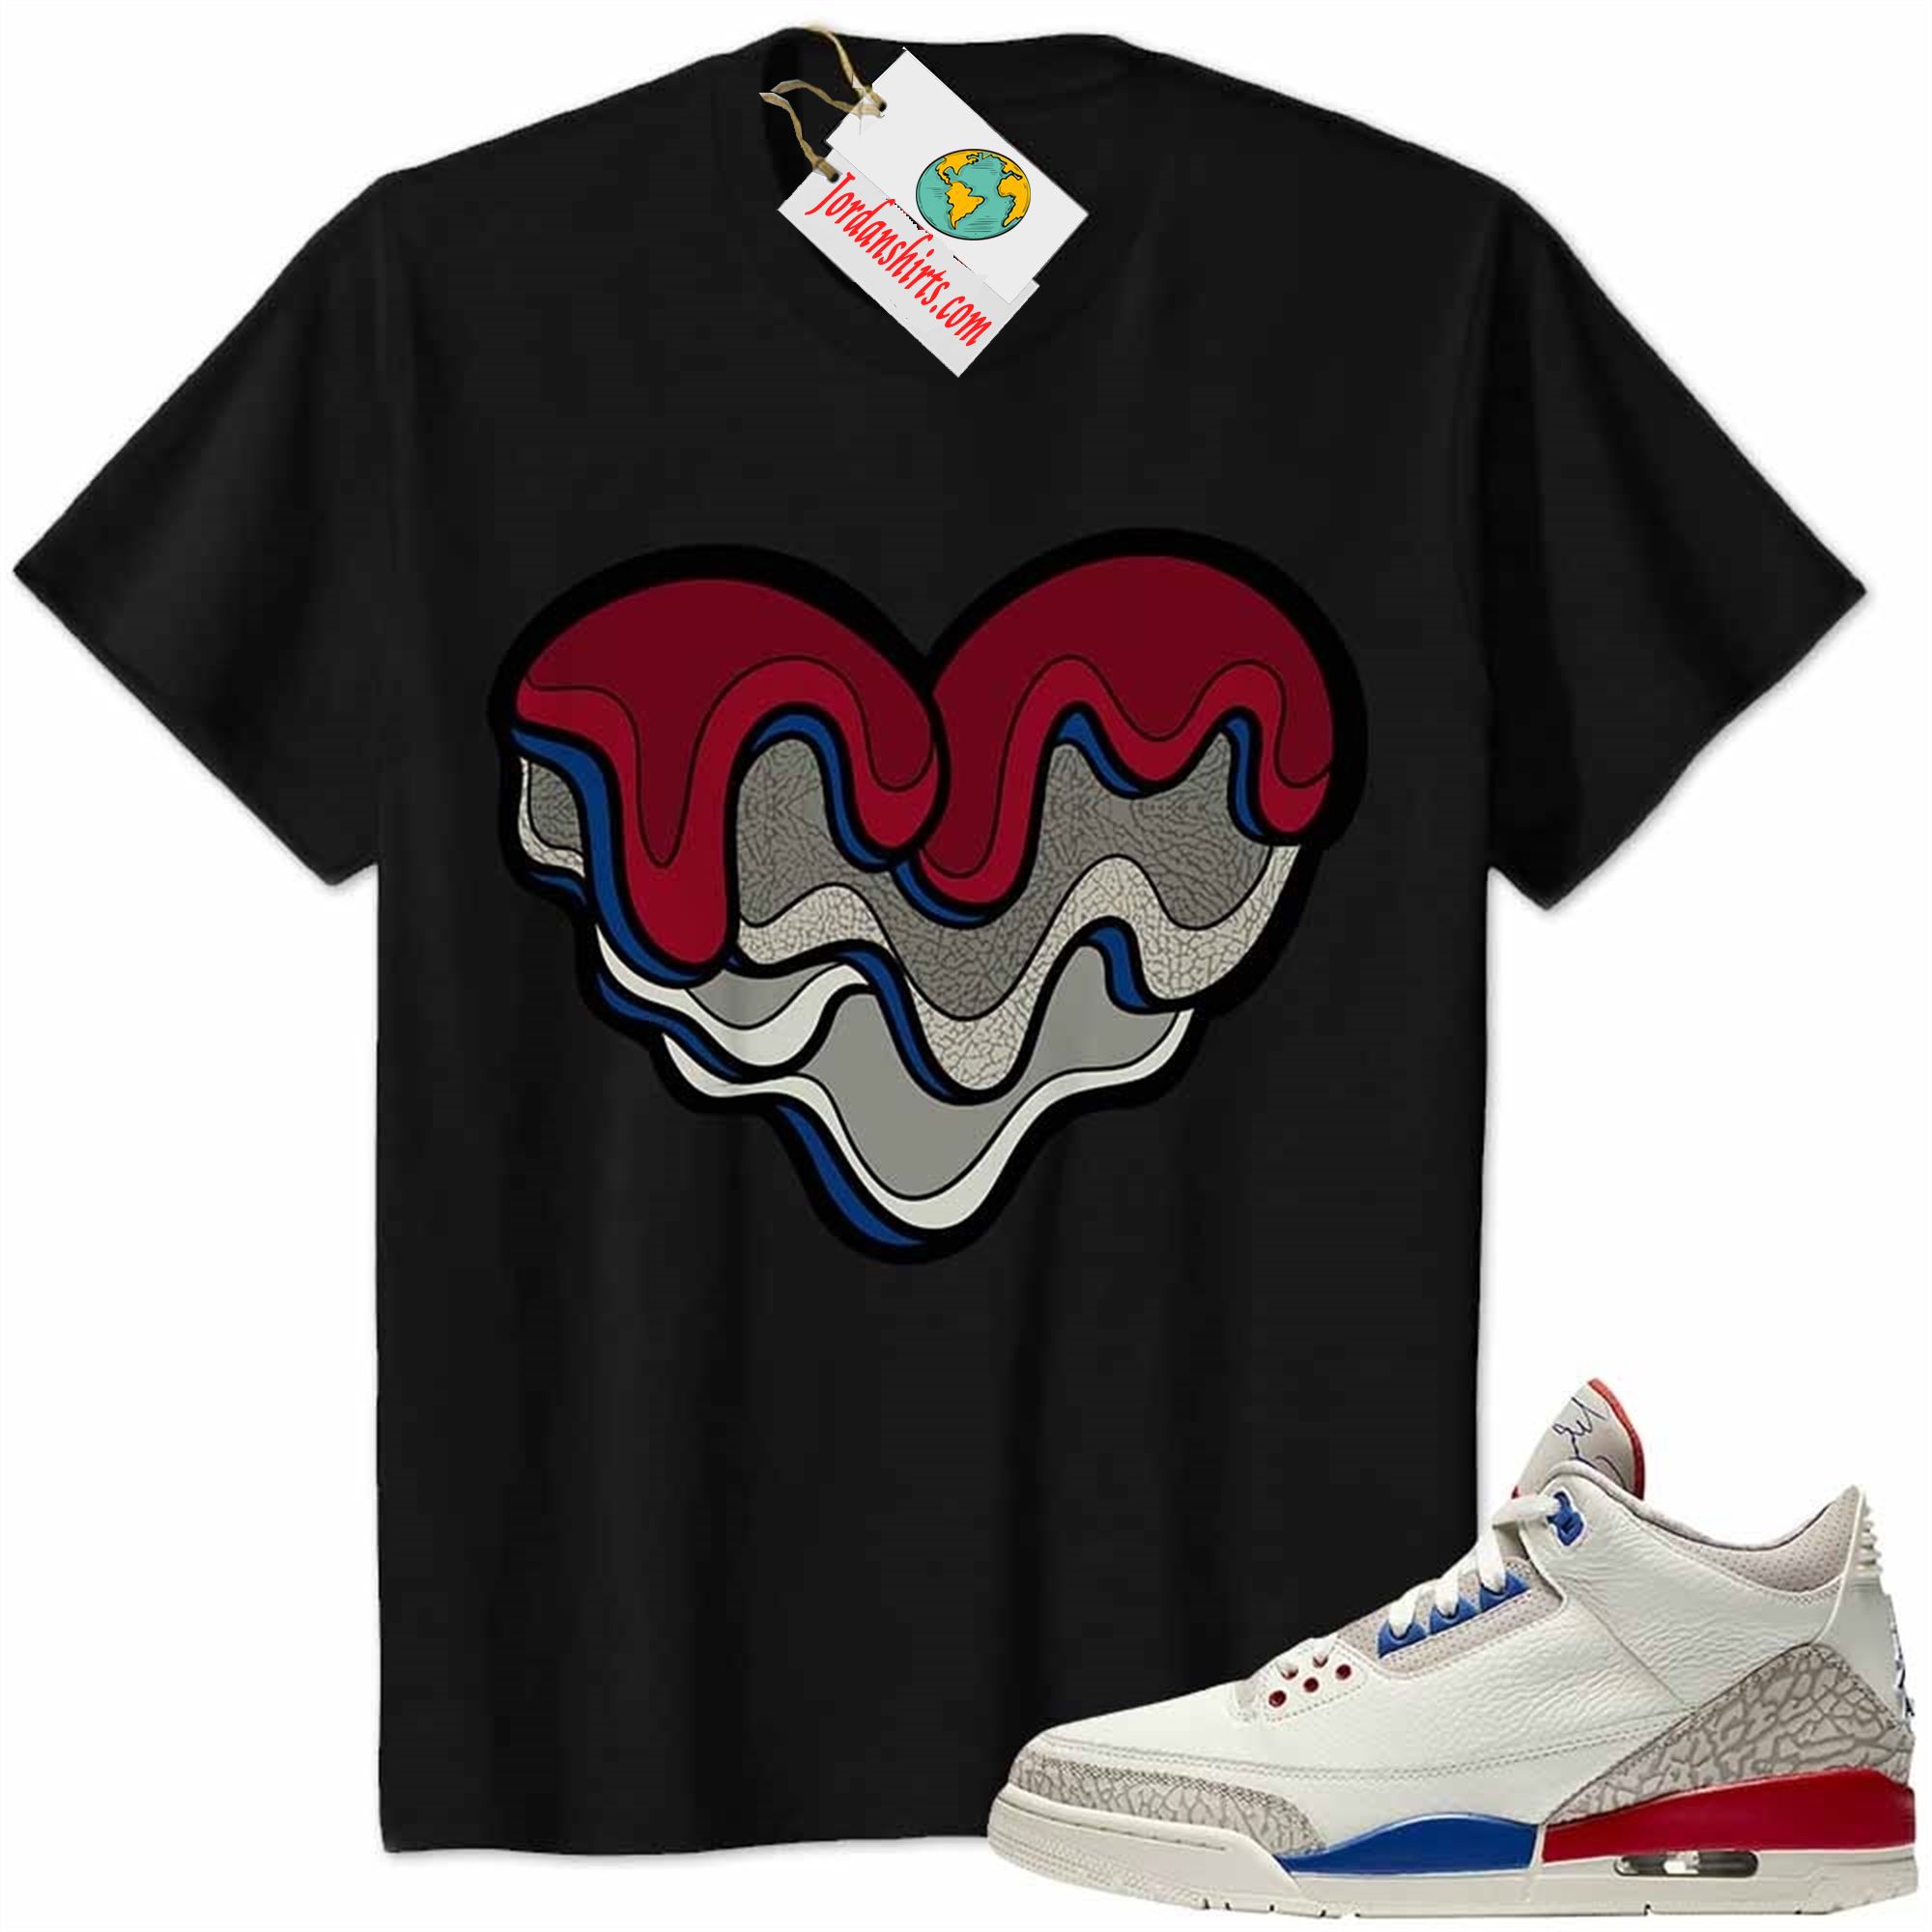 Jordan 3 Shirt, Melt Dripping Heart Black Air Jordan 3 International Flight Charity Game 3s Plus Size Up To 5xl